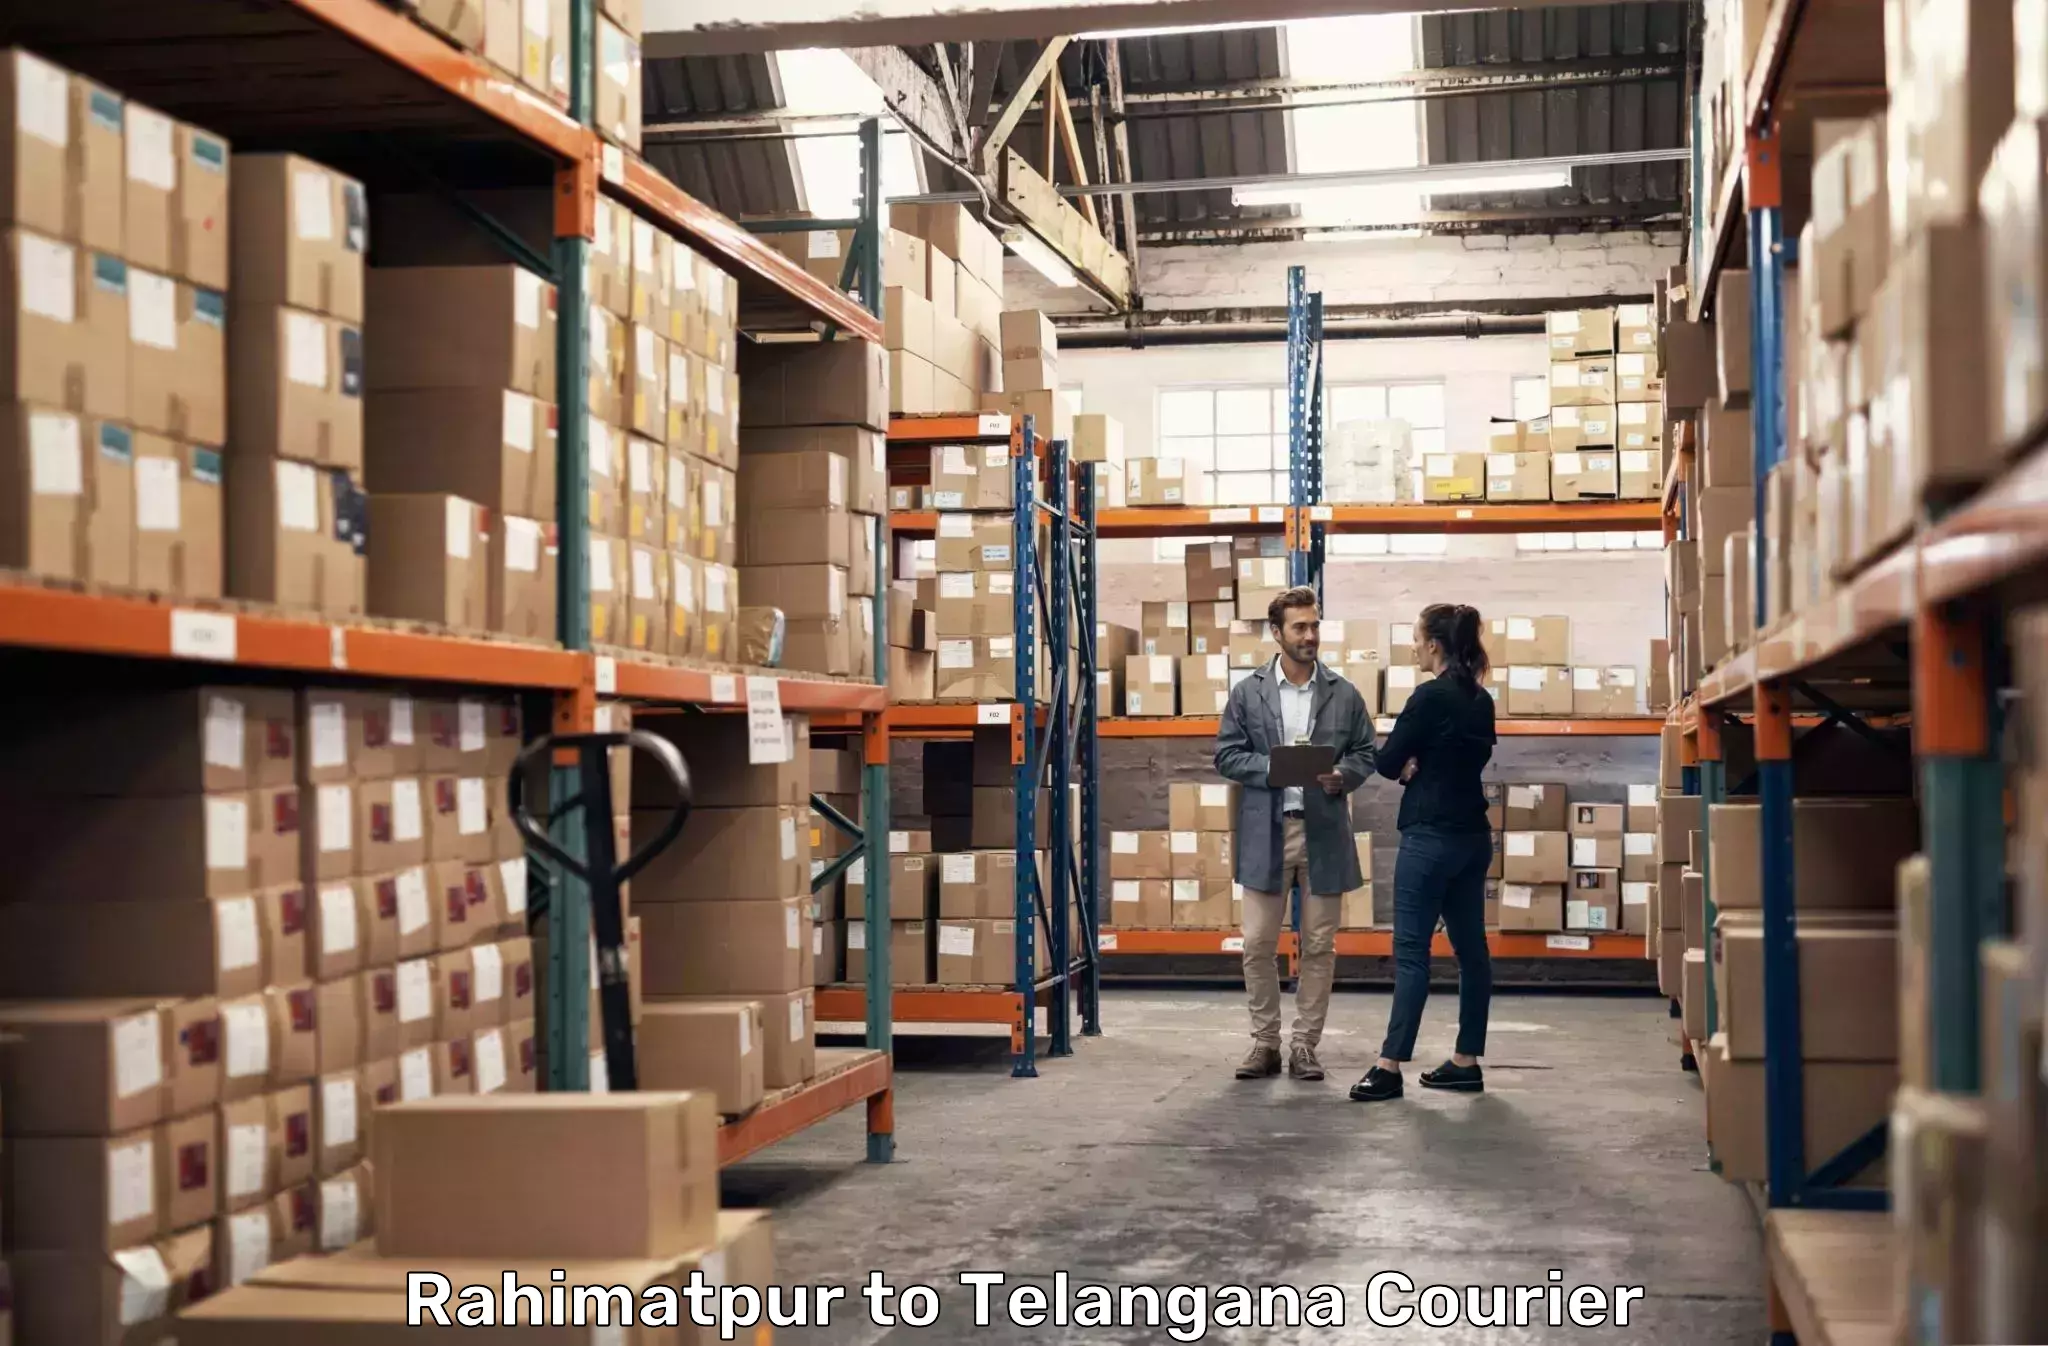 Efficient parcel tracking Rahimatpur to Rayaparthi